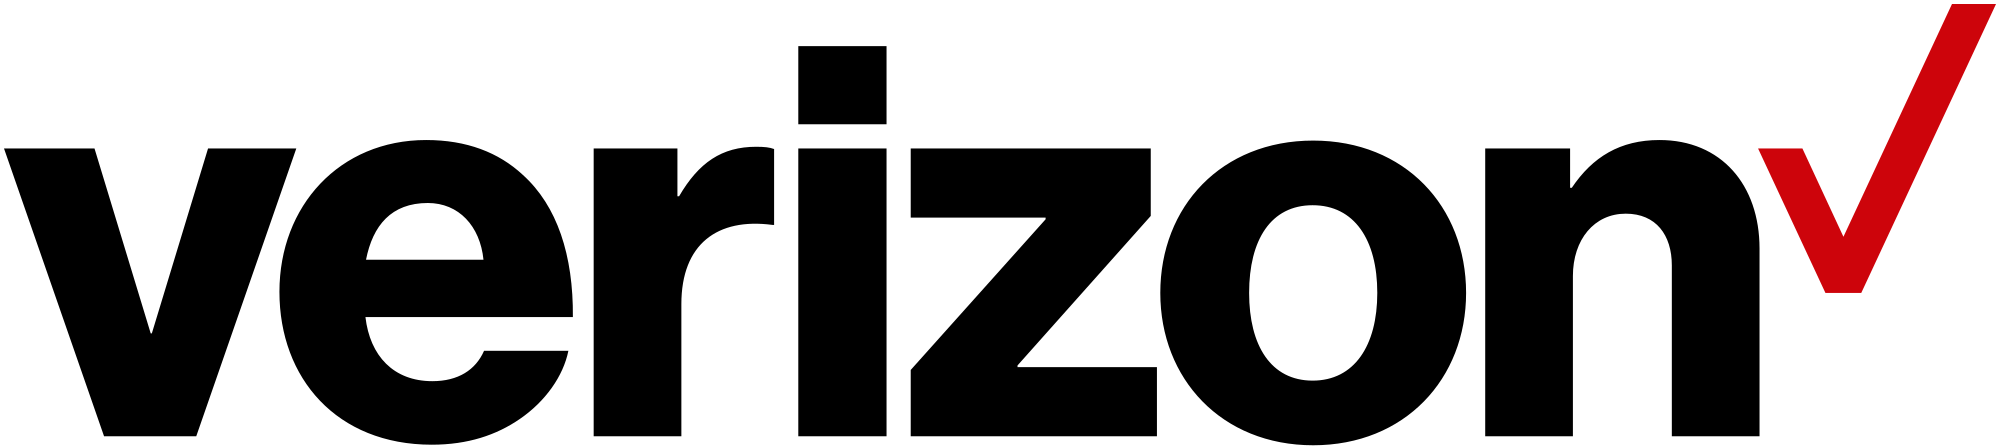 Open  , Verizon 2015 Logo Vector PNG - Free PNG